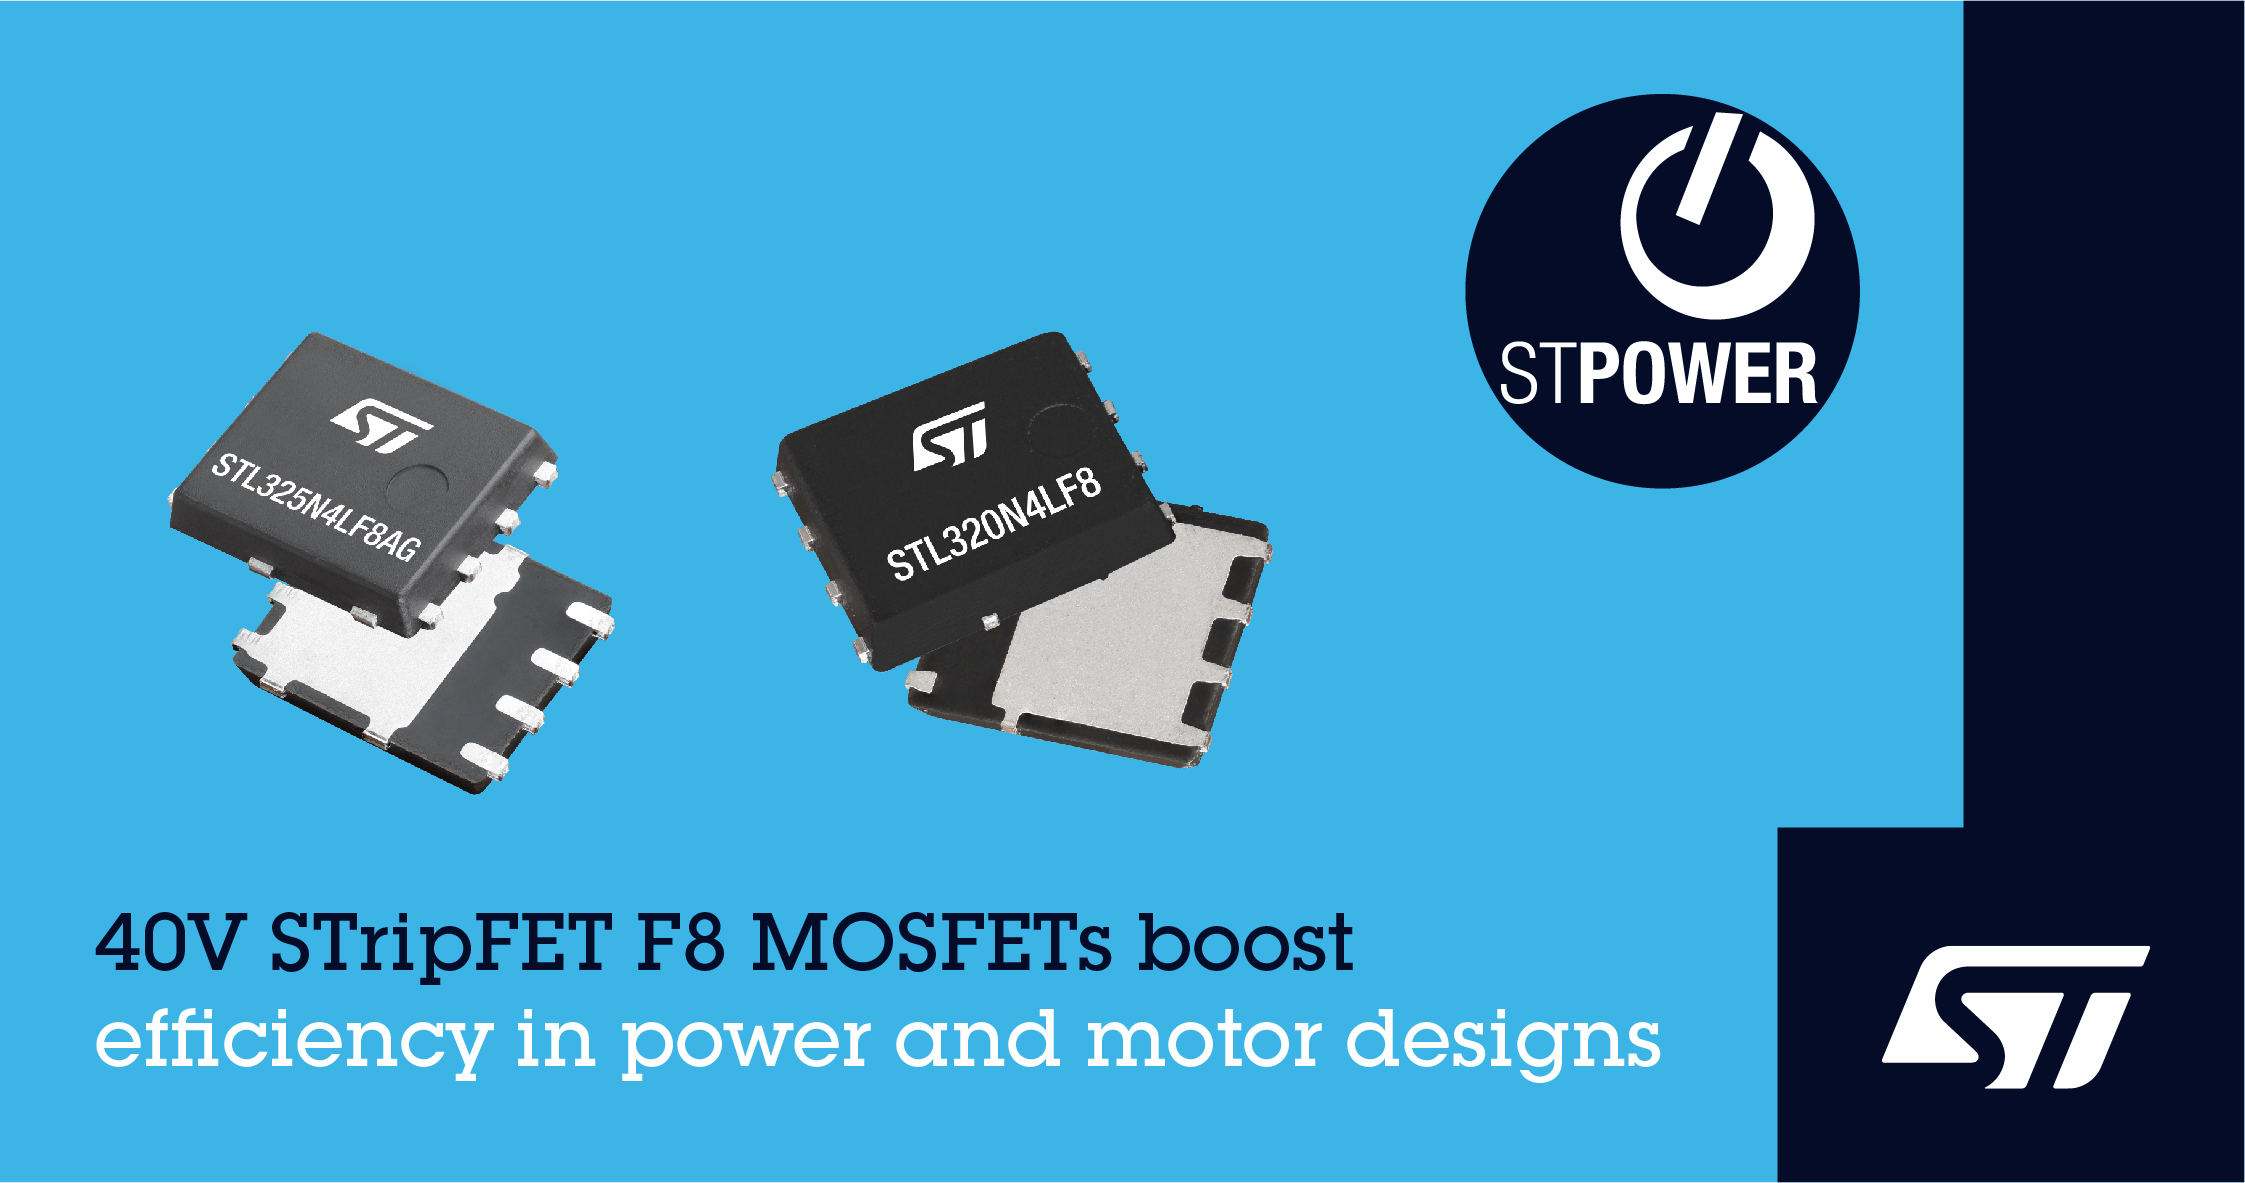 STマイクロエレクトロニクス、低消費電力・低ノイズの40V耐圧パワーMOSFETを発表